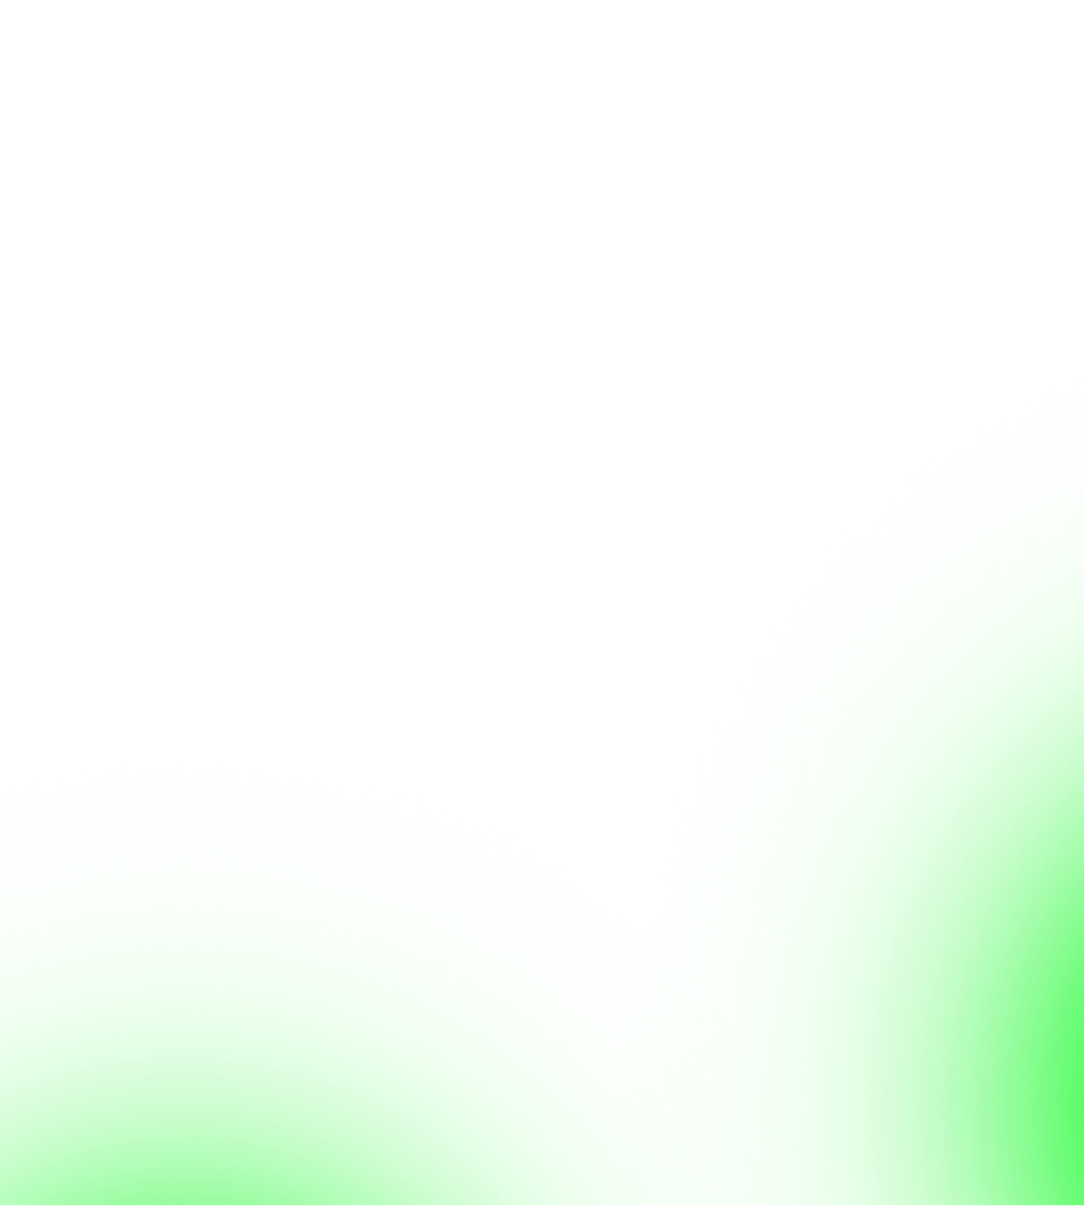 Green, transparent gradient